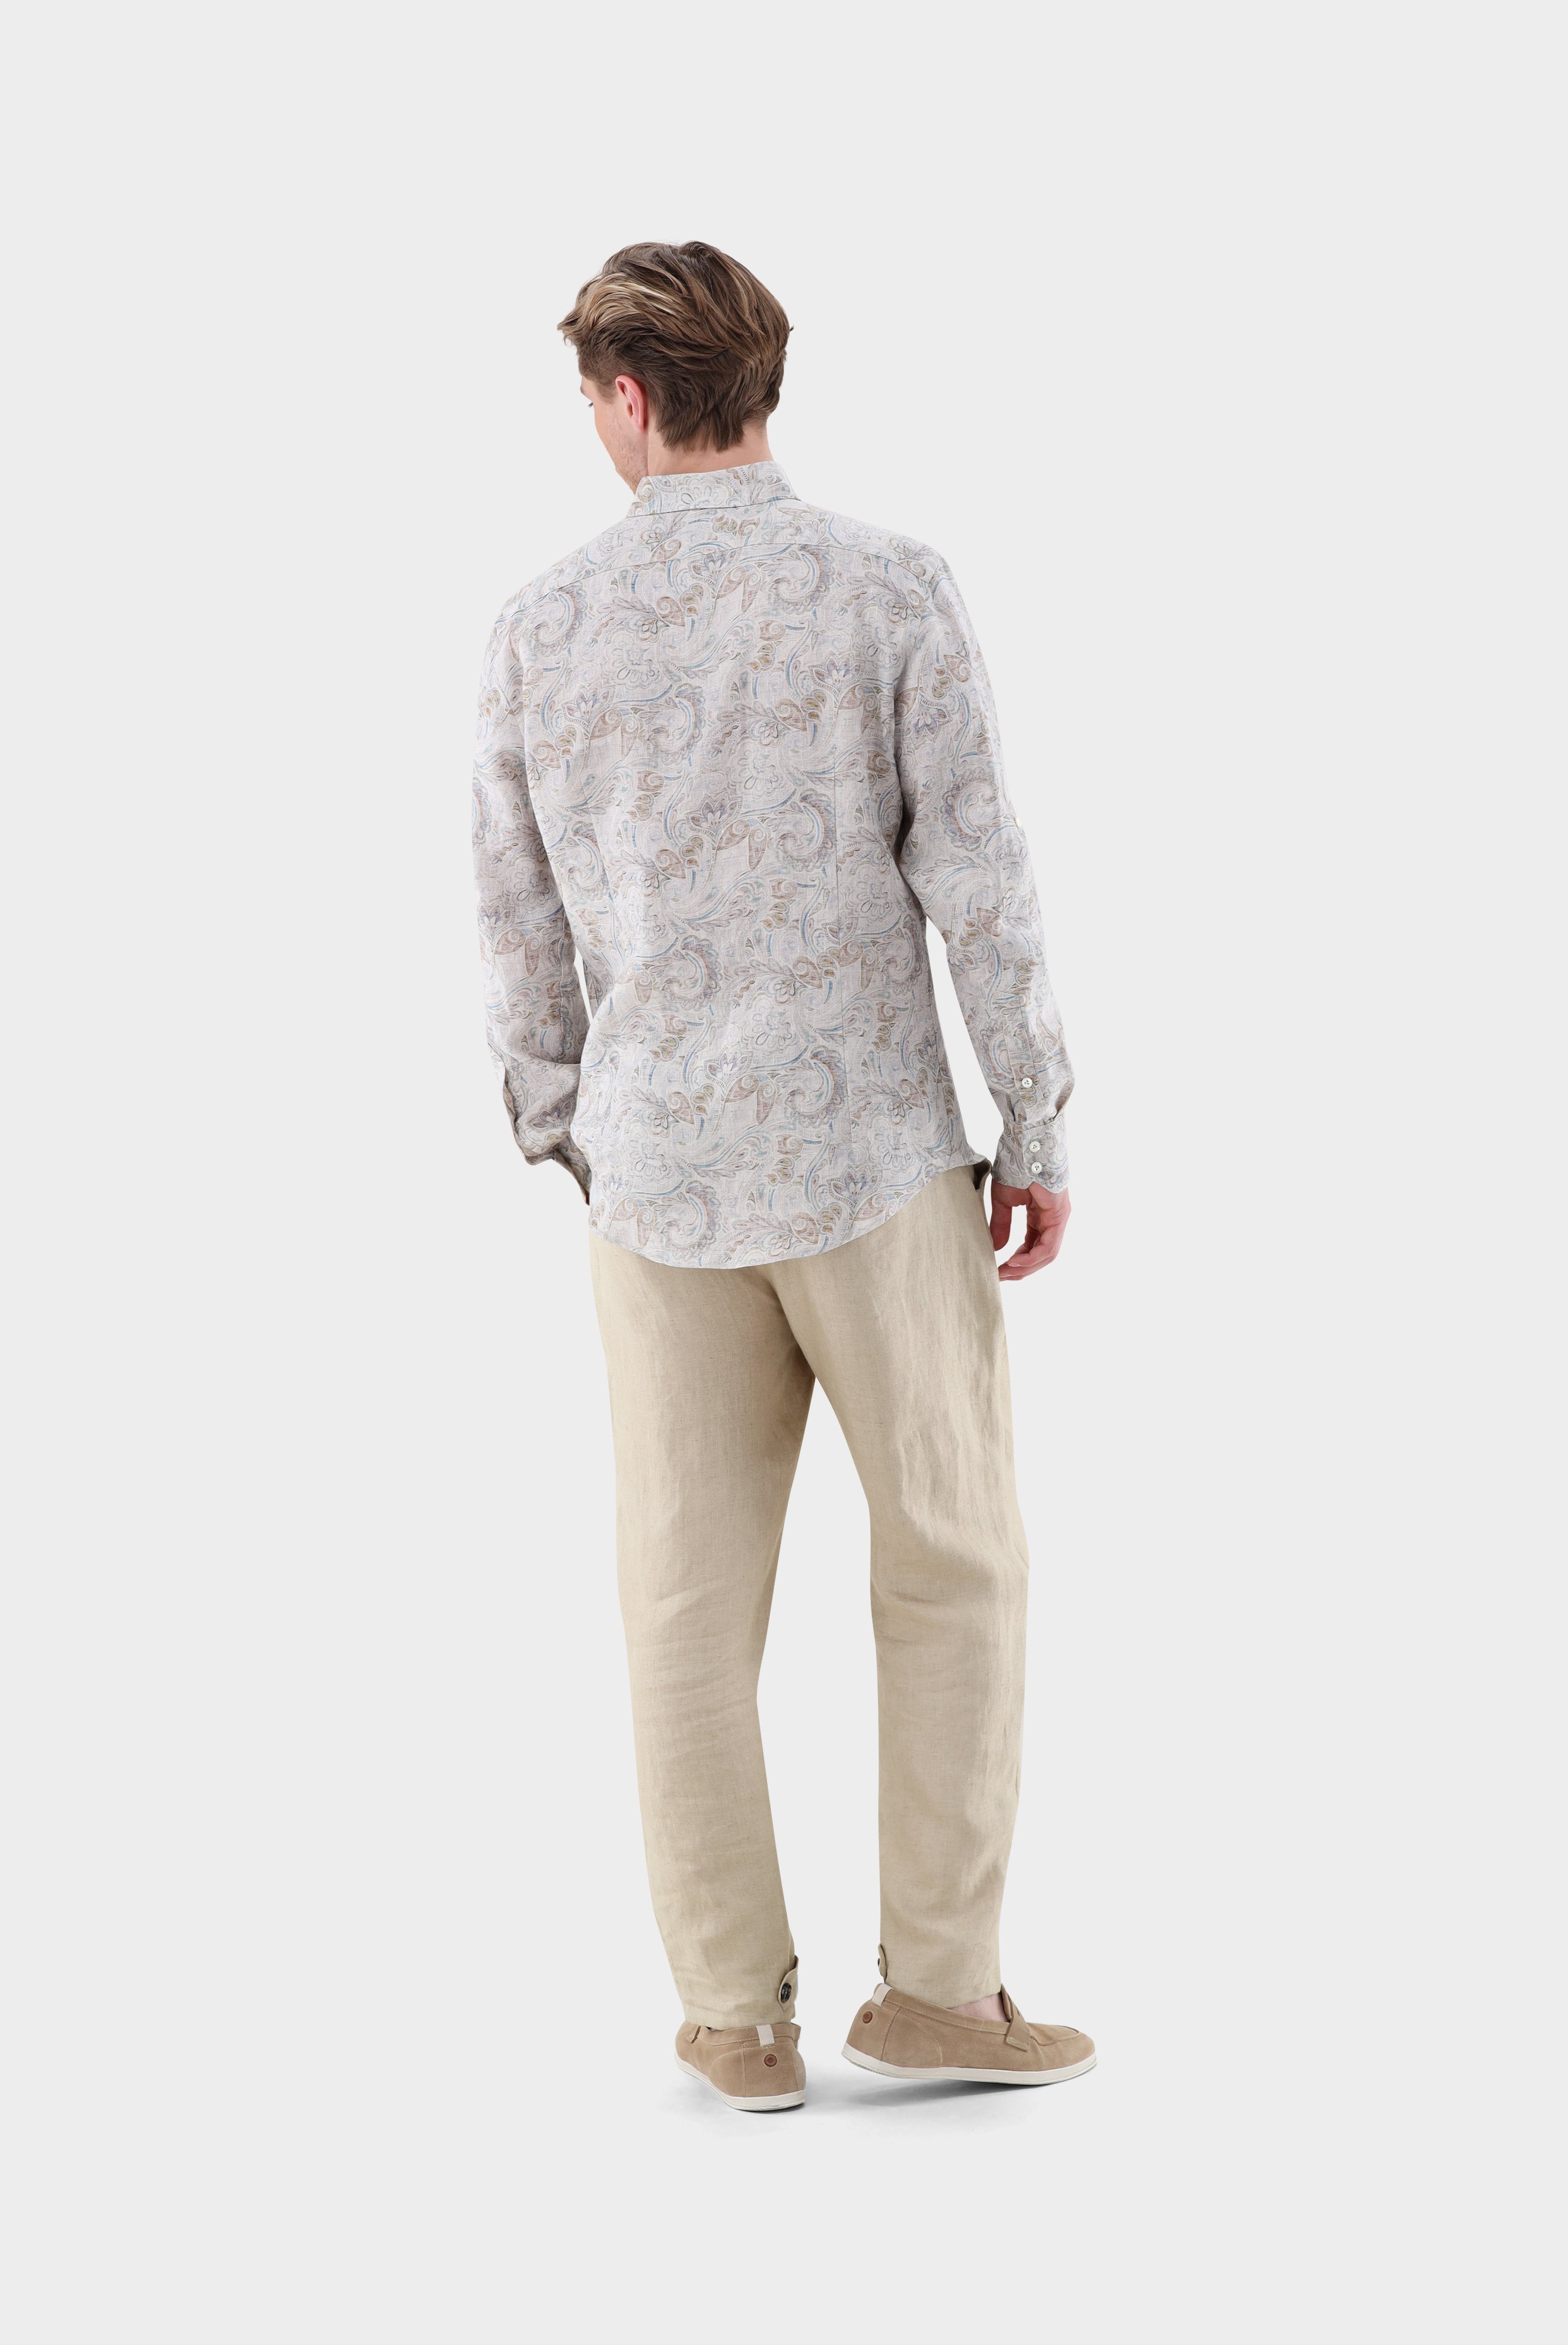 Casual Hemden+Leinenhemd mit Paisley-Druck Tailor Fit+20.2013.C4.172036.118.40